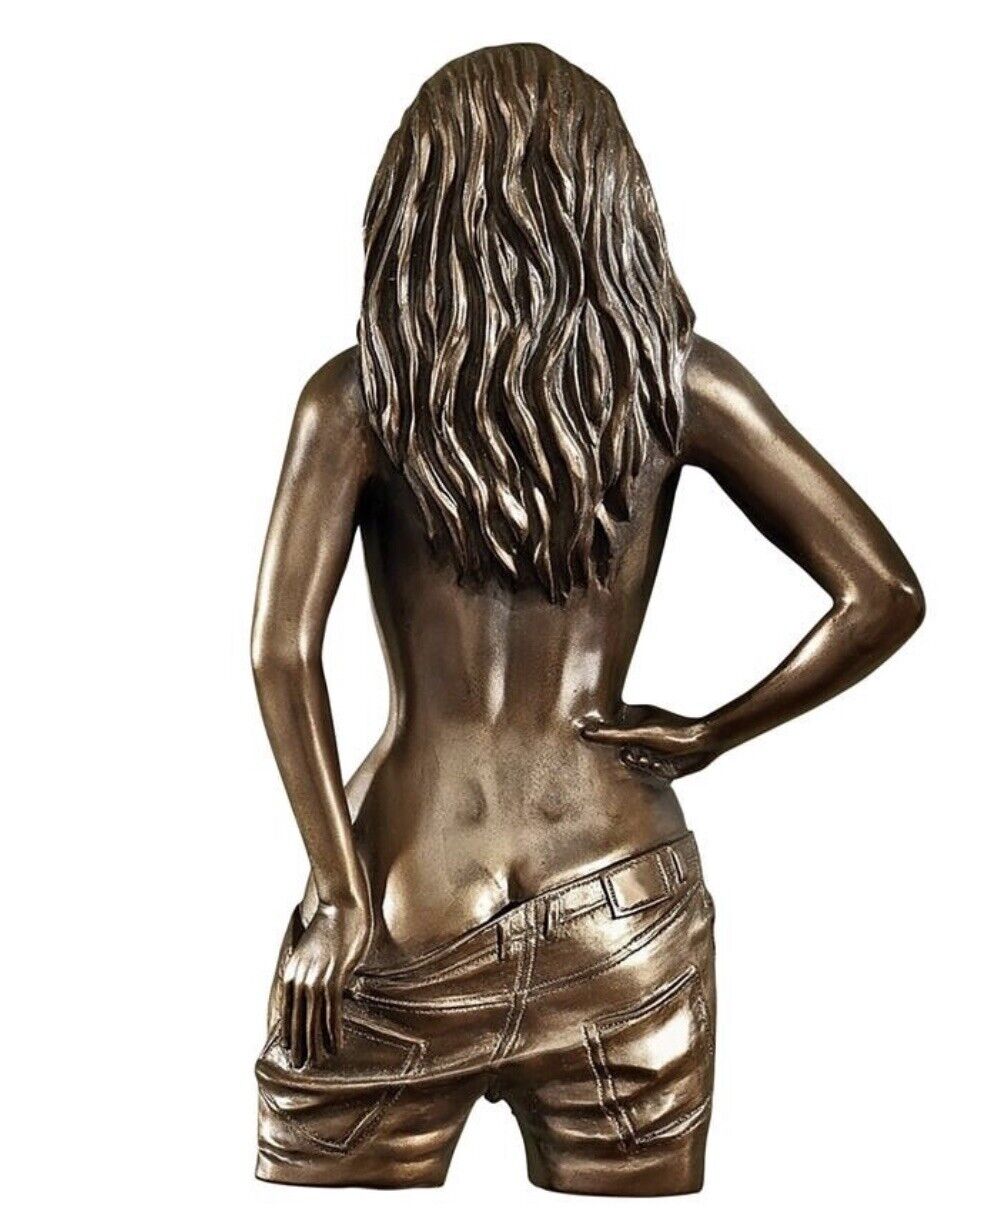 Risque nude Rear view sensual female wall sculpture 10”